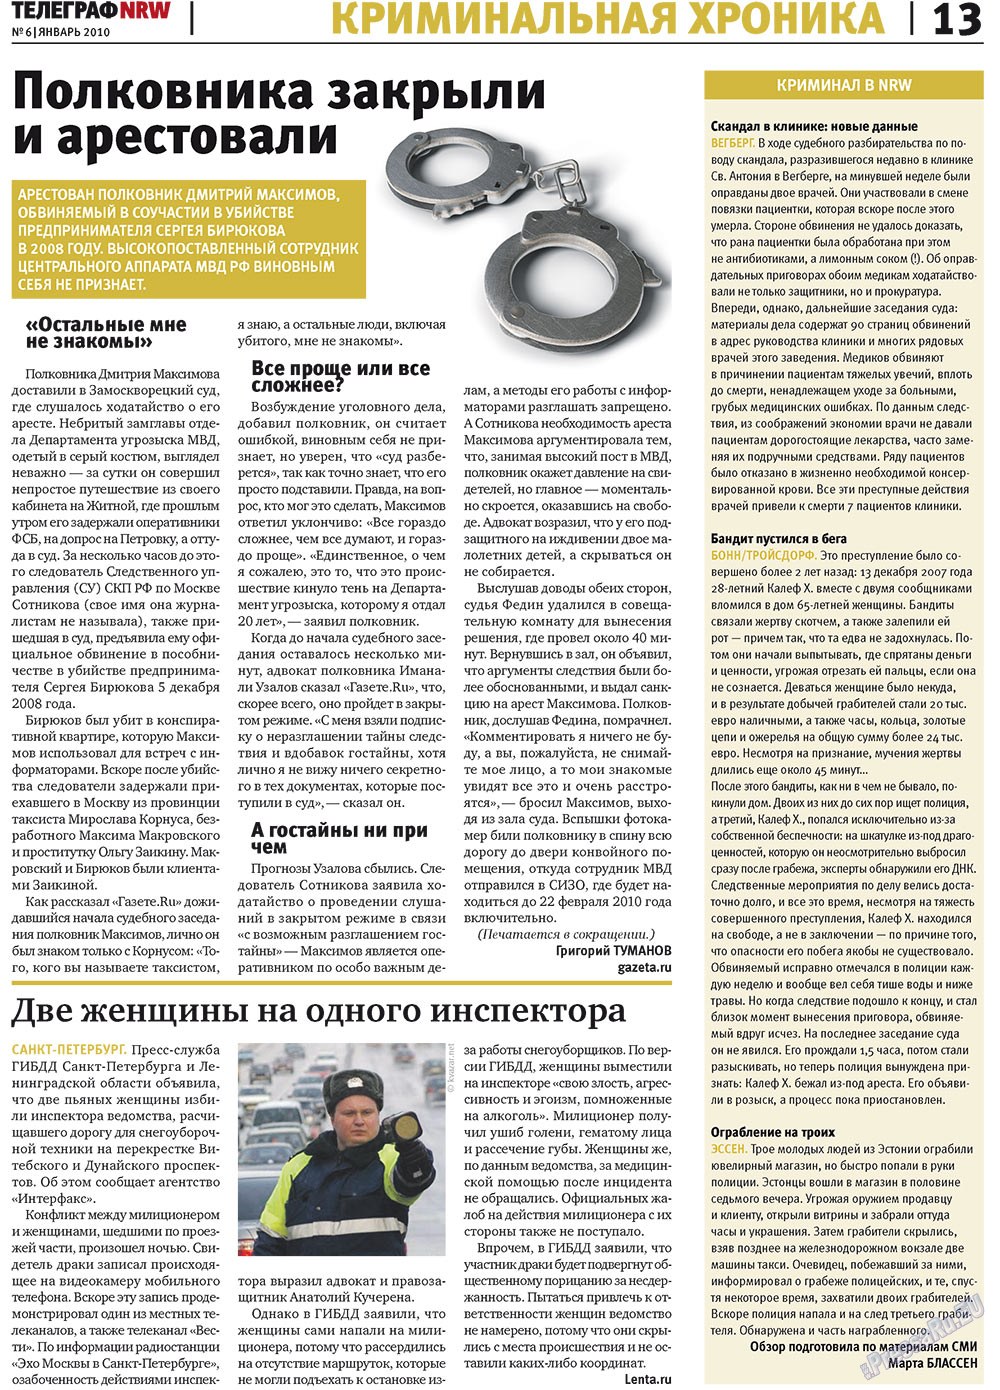 Телеграф NRW, газета. 2010 №1 стр.13